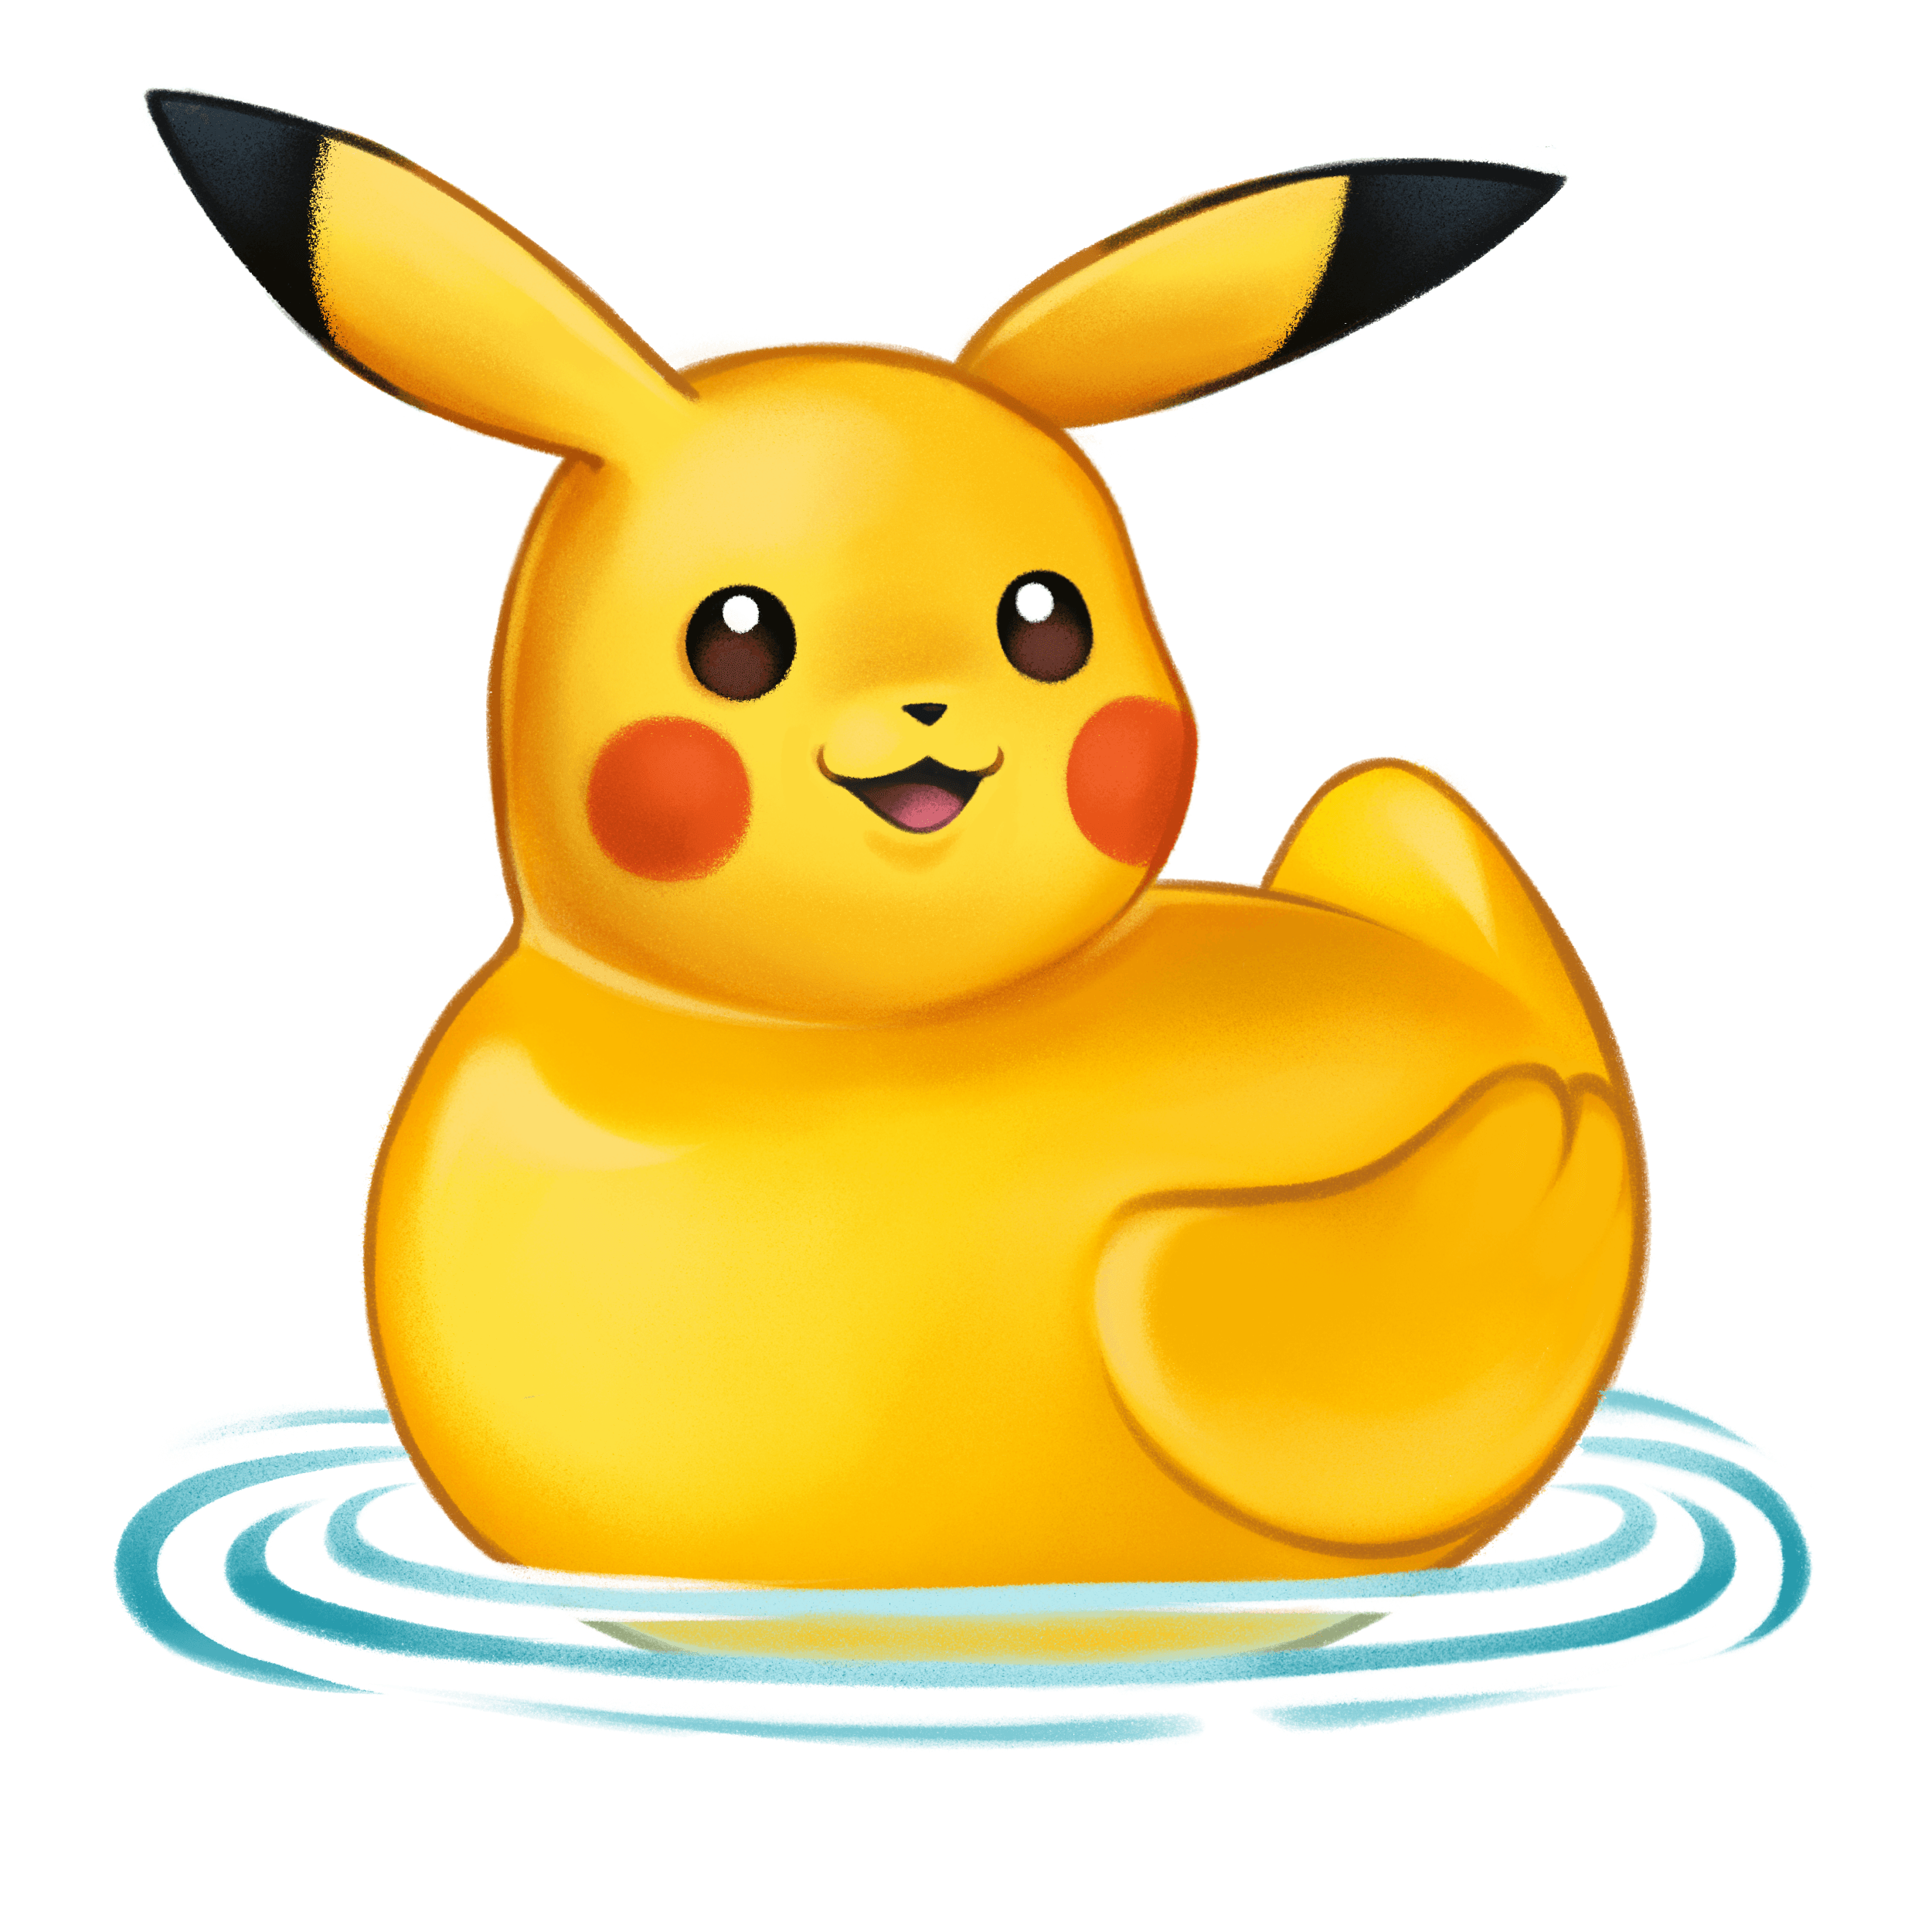 The Pikachu Rubber Duck